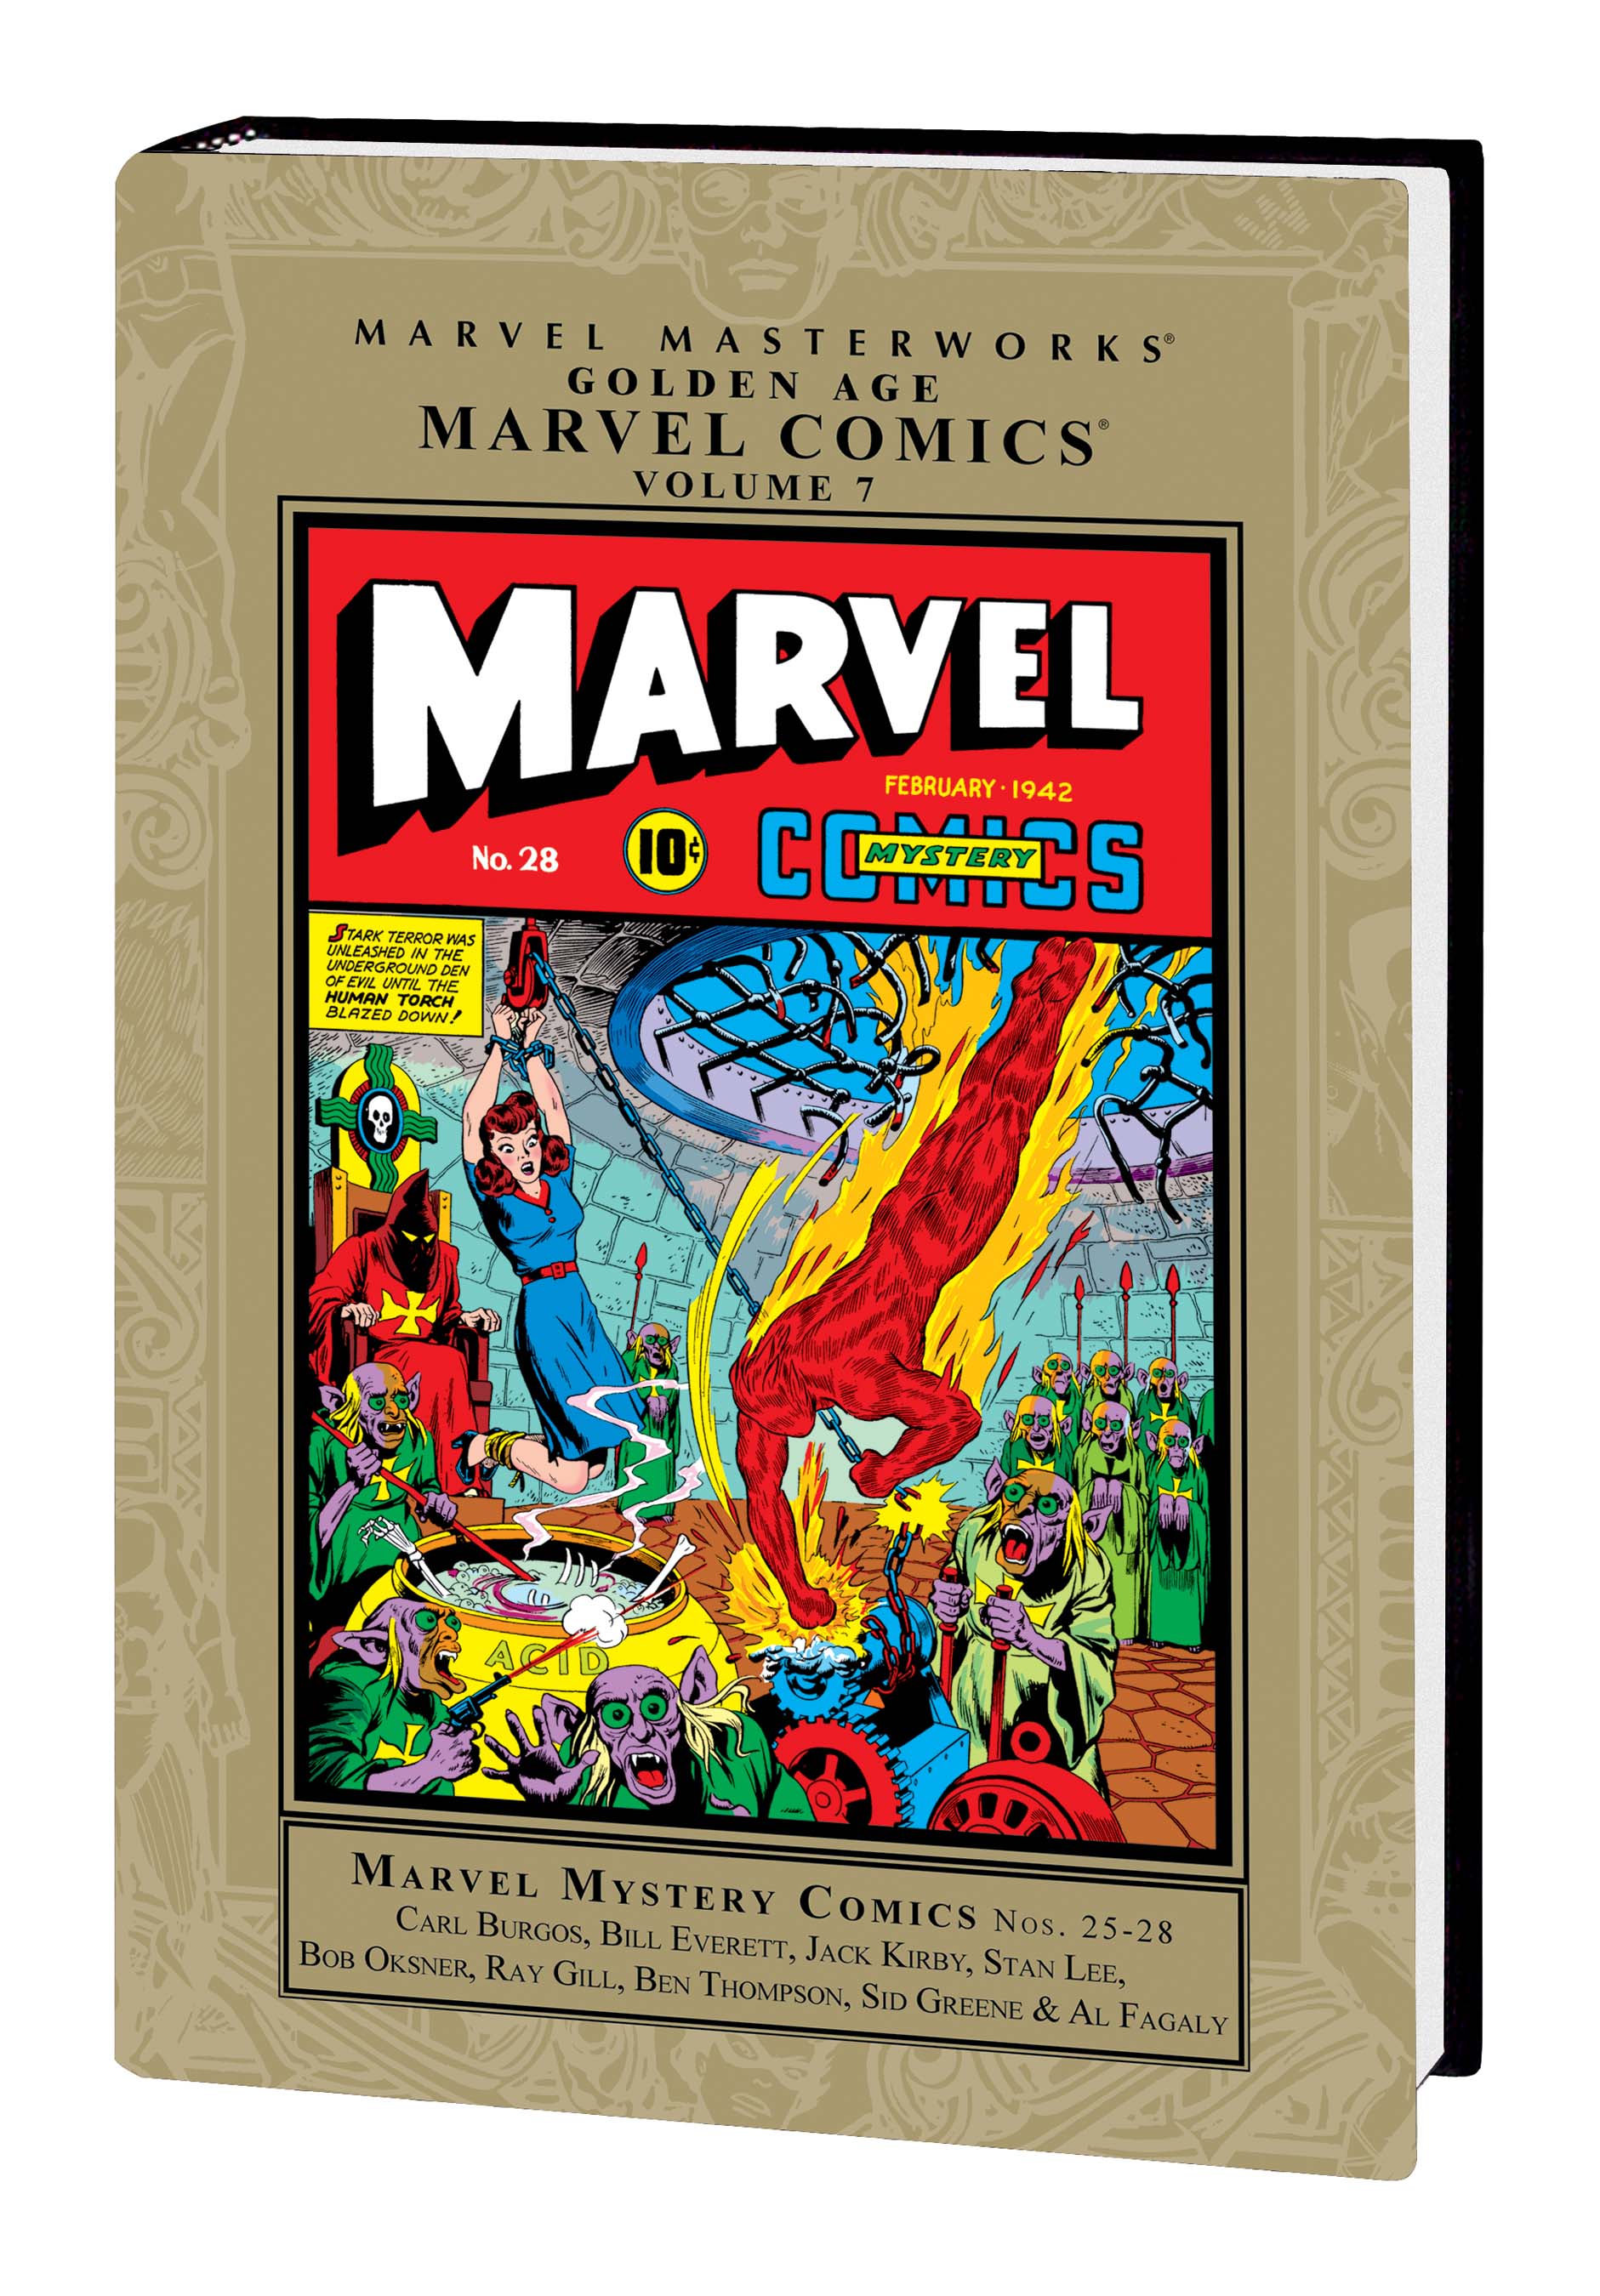 Marvel Masterworks: Golden Age Marvel Comics (Hardcover)